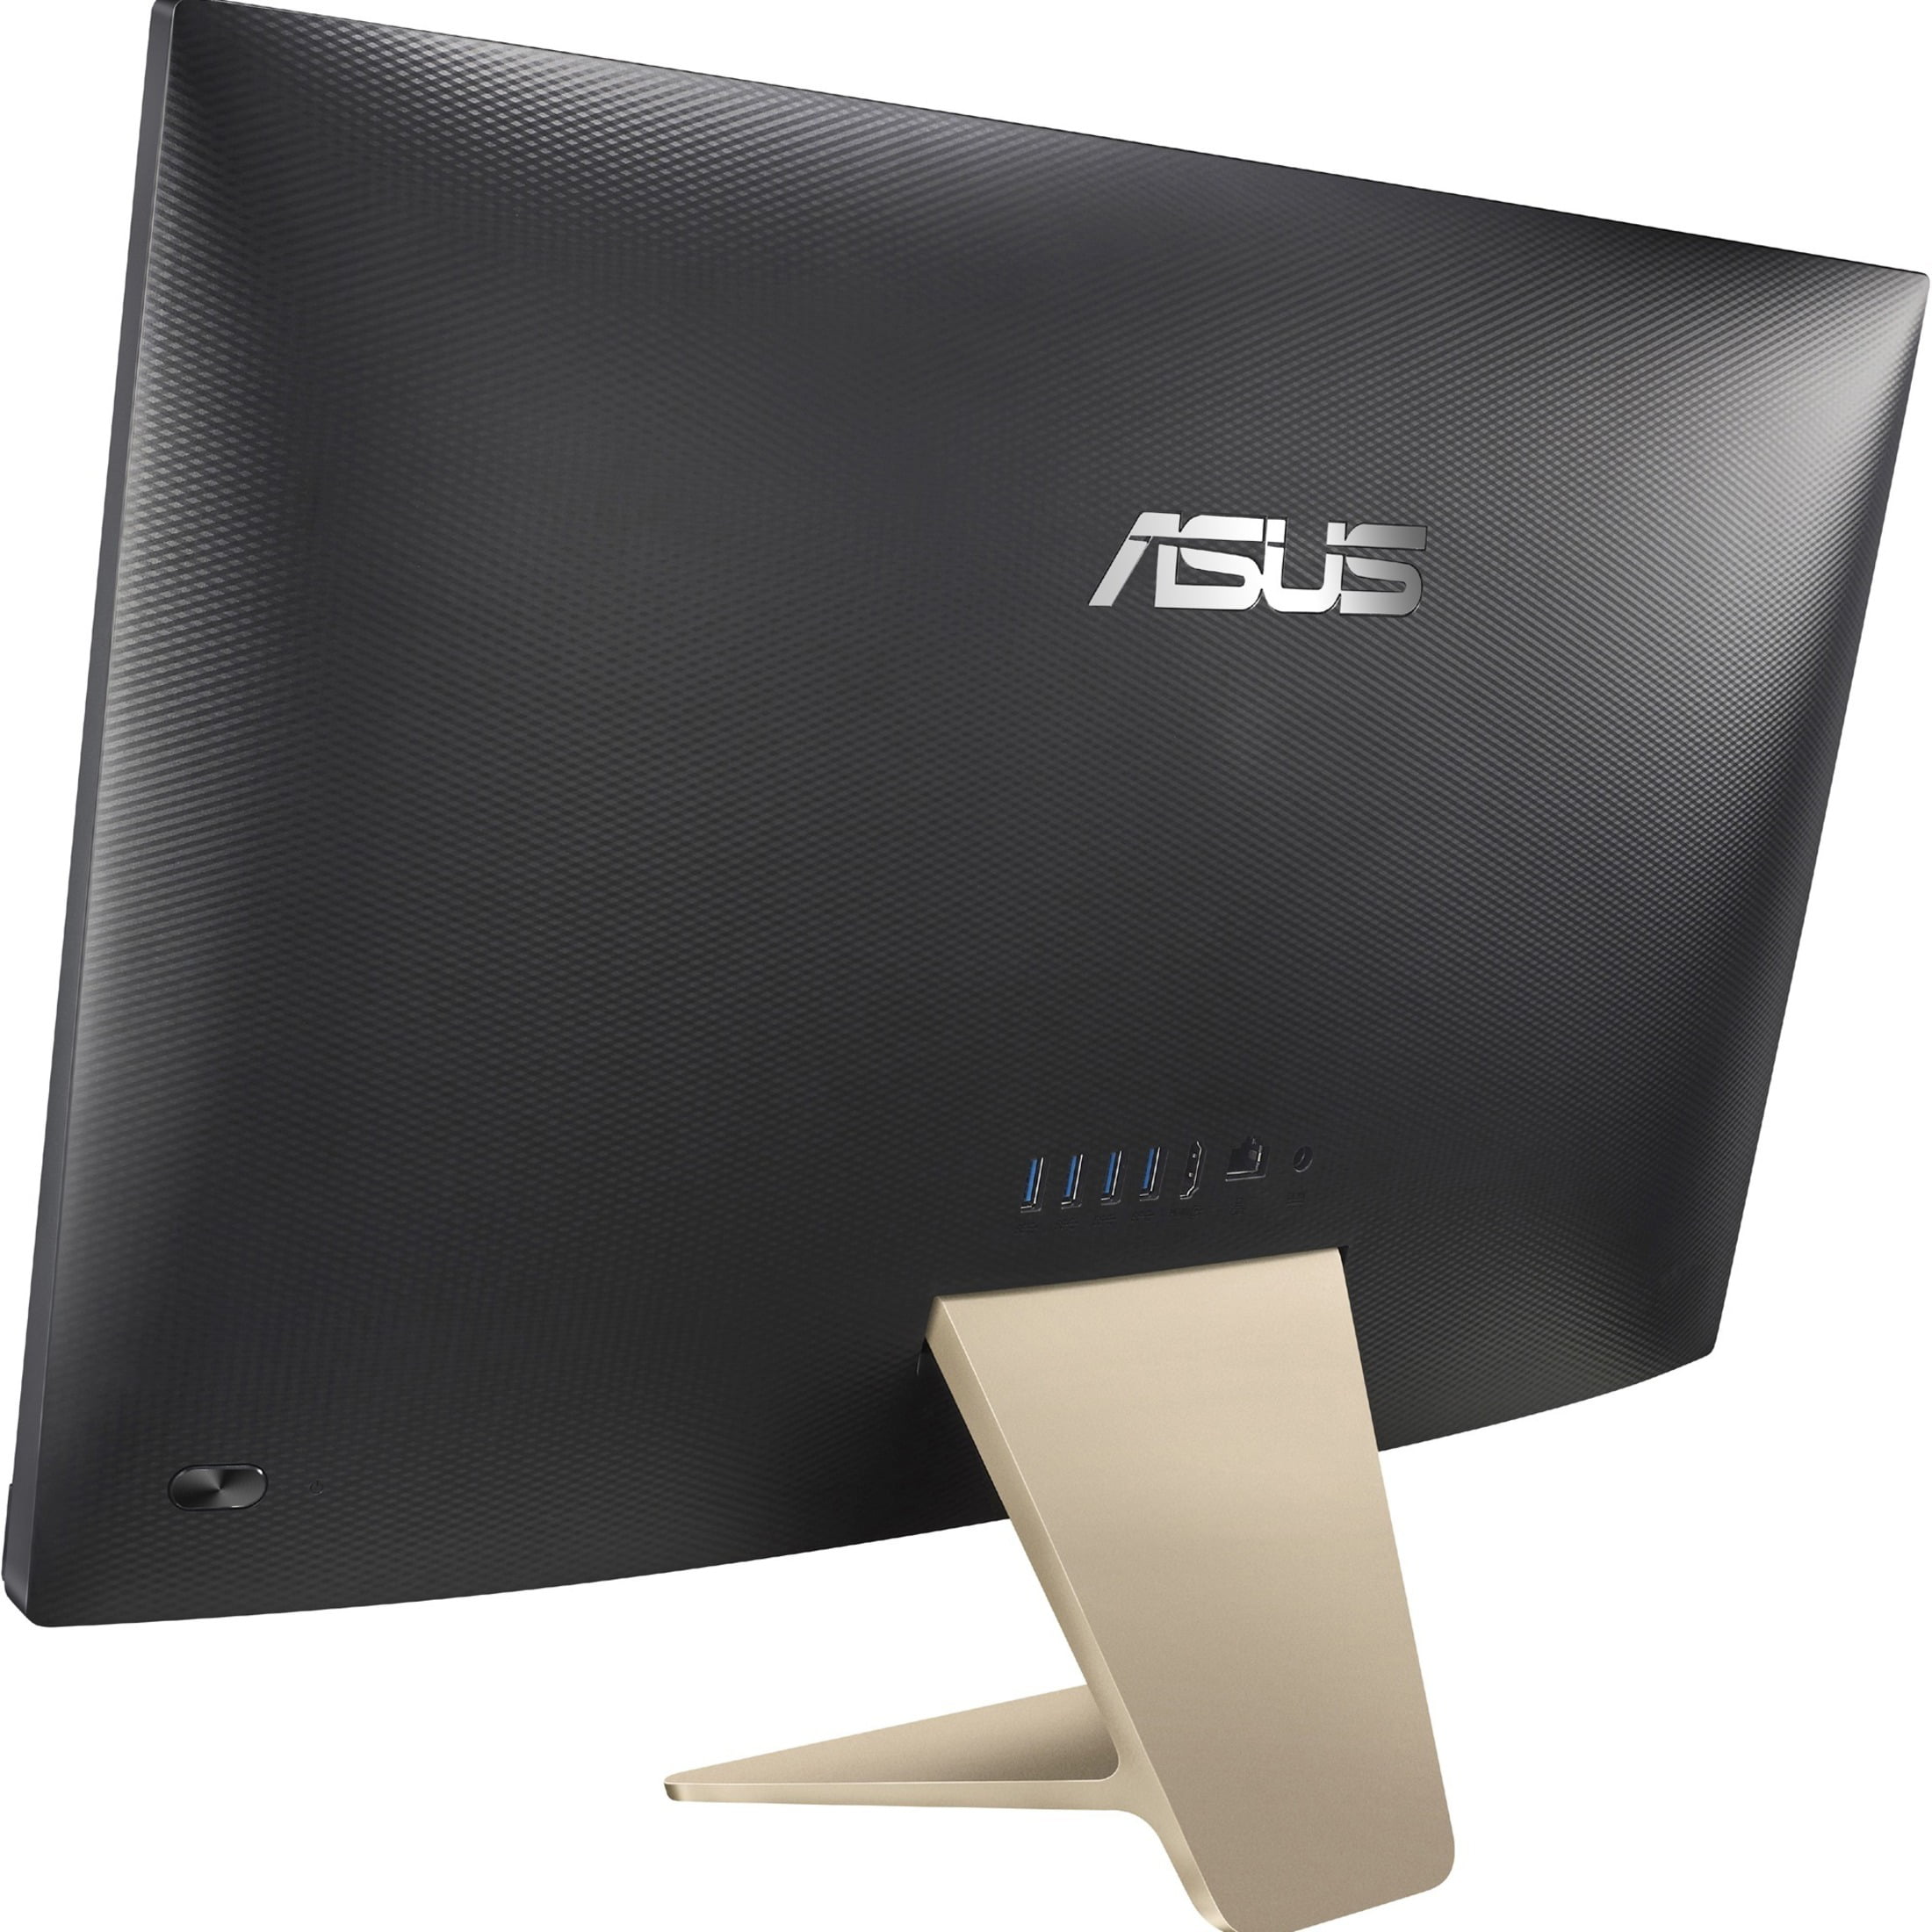 ASUS AiO All-in-One Desktop PC， 23.8 FHD Anti-glare Display， Intel Pentium  Gold 7505 Processor， 8GB DDR4 RAM， 256GB PCIe SSD， Windows 10 Home， Kensin  のオシャレな スマホ、タブレット、パソコン